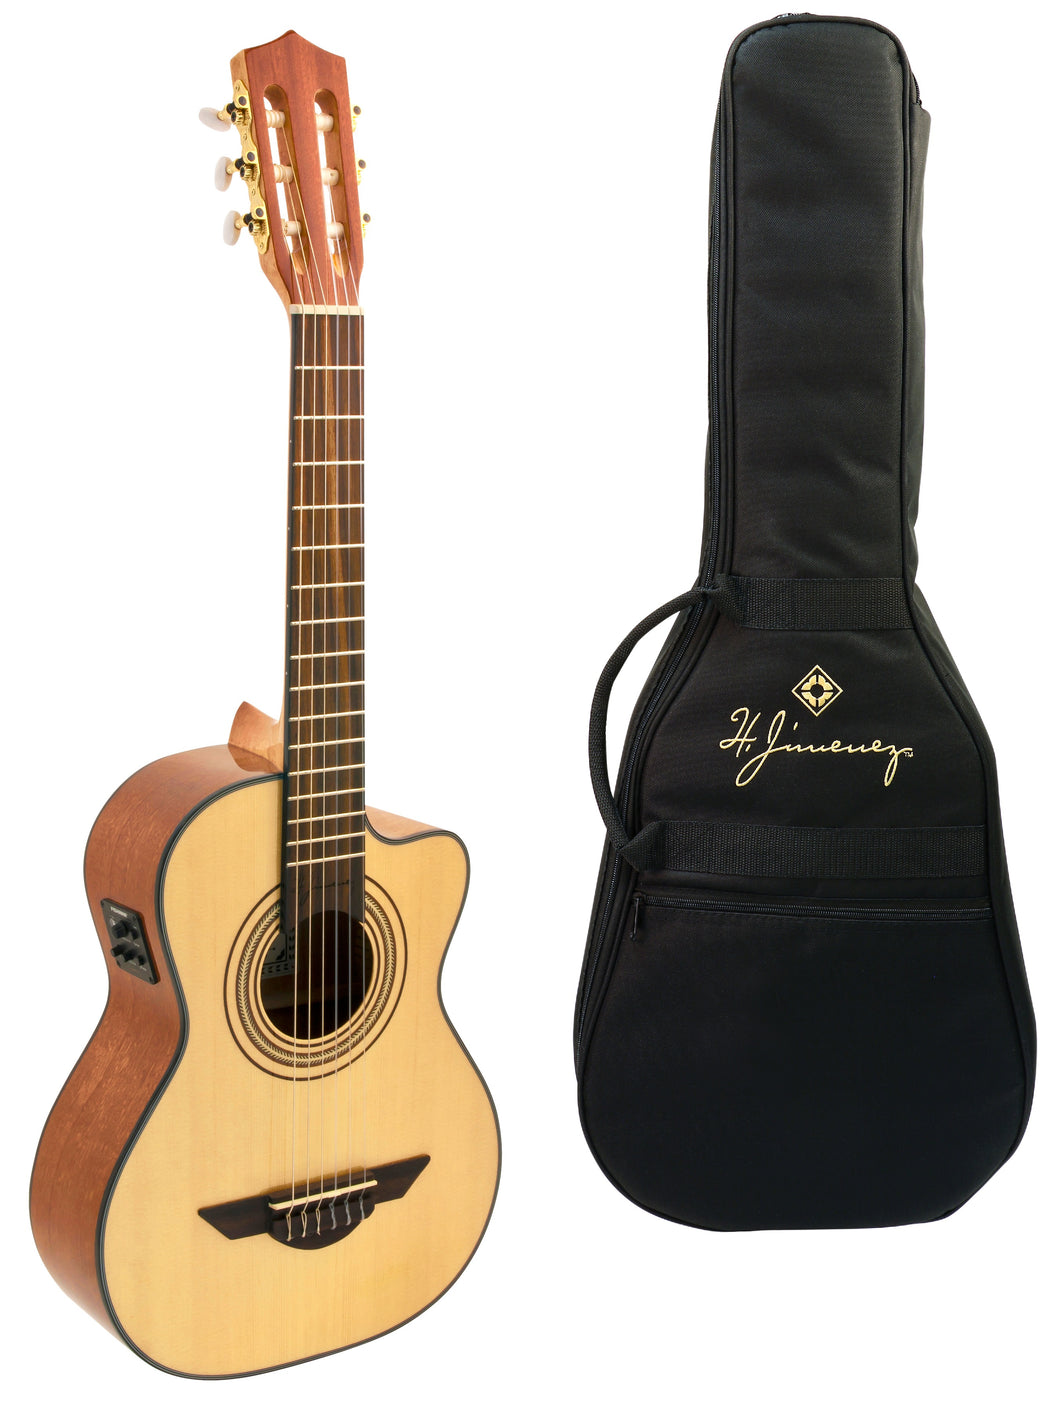 H Jimenez Voz de Trio Acoustic/Electric Requinto with Pickup | FREE Gig Bag | NEW Authorized Dealer